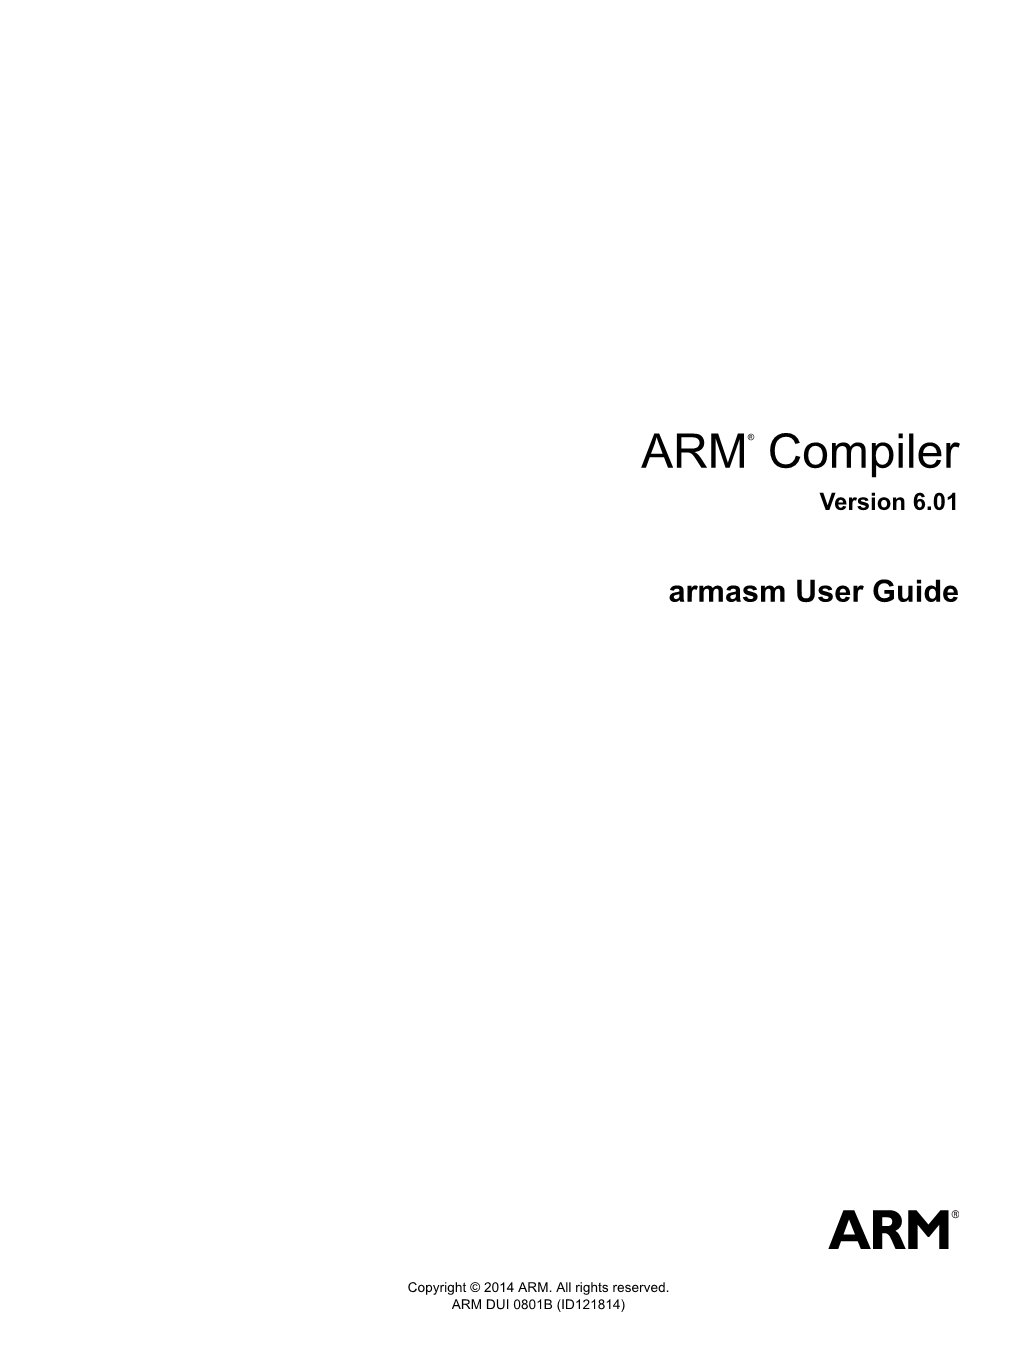 ARM Compiler Armasm User Guide